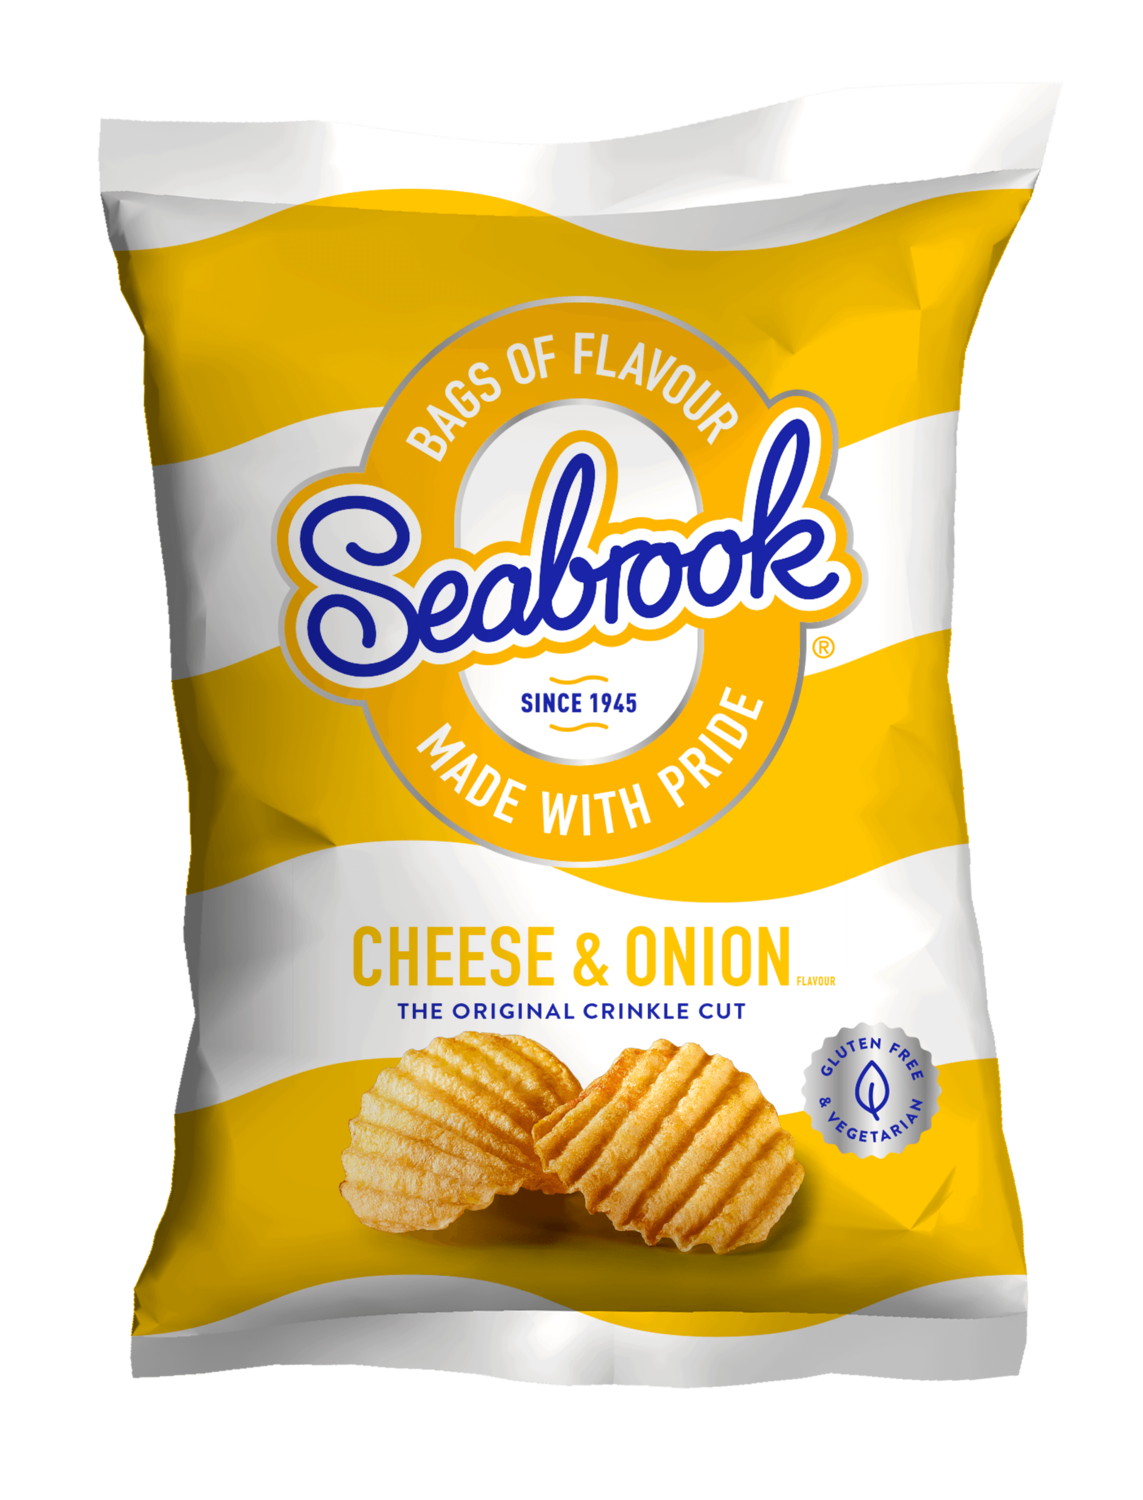 Cheese & Onion Seabrook Crisps